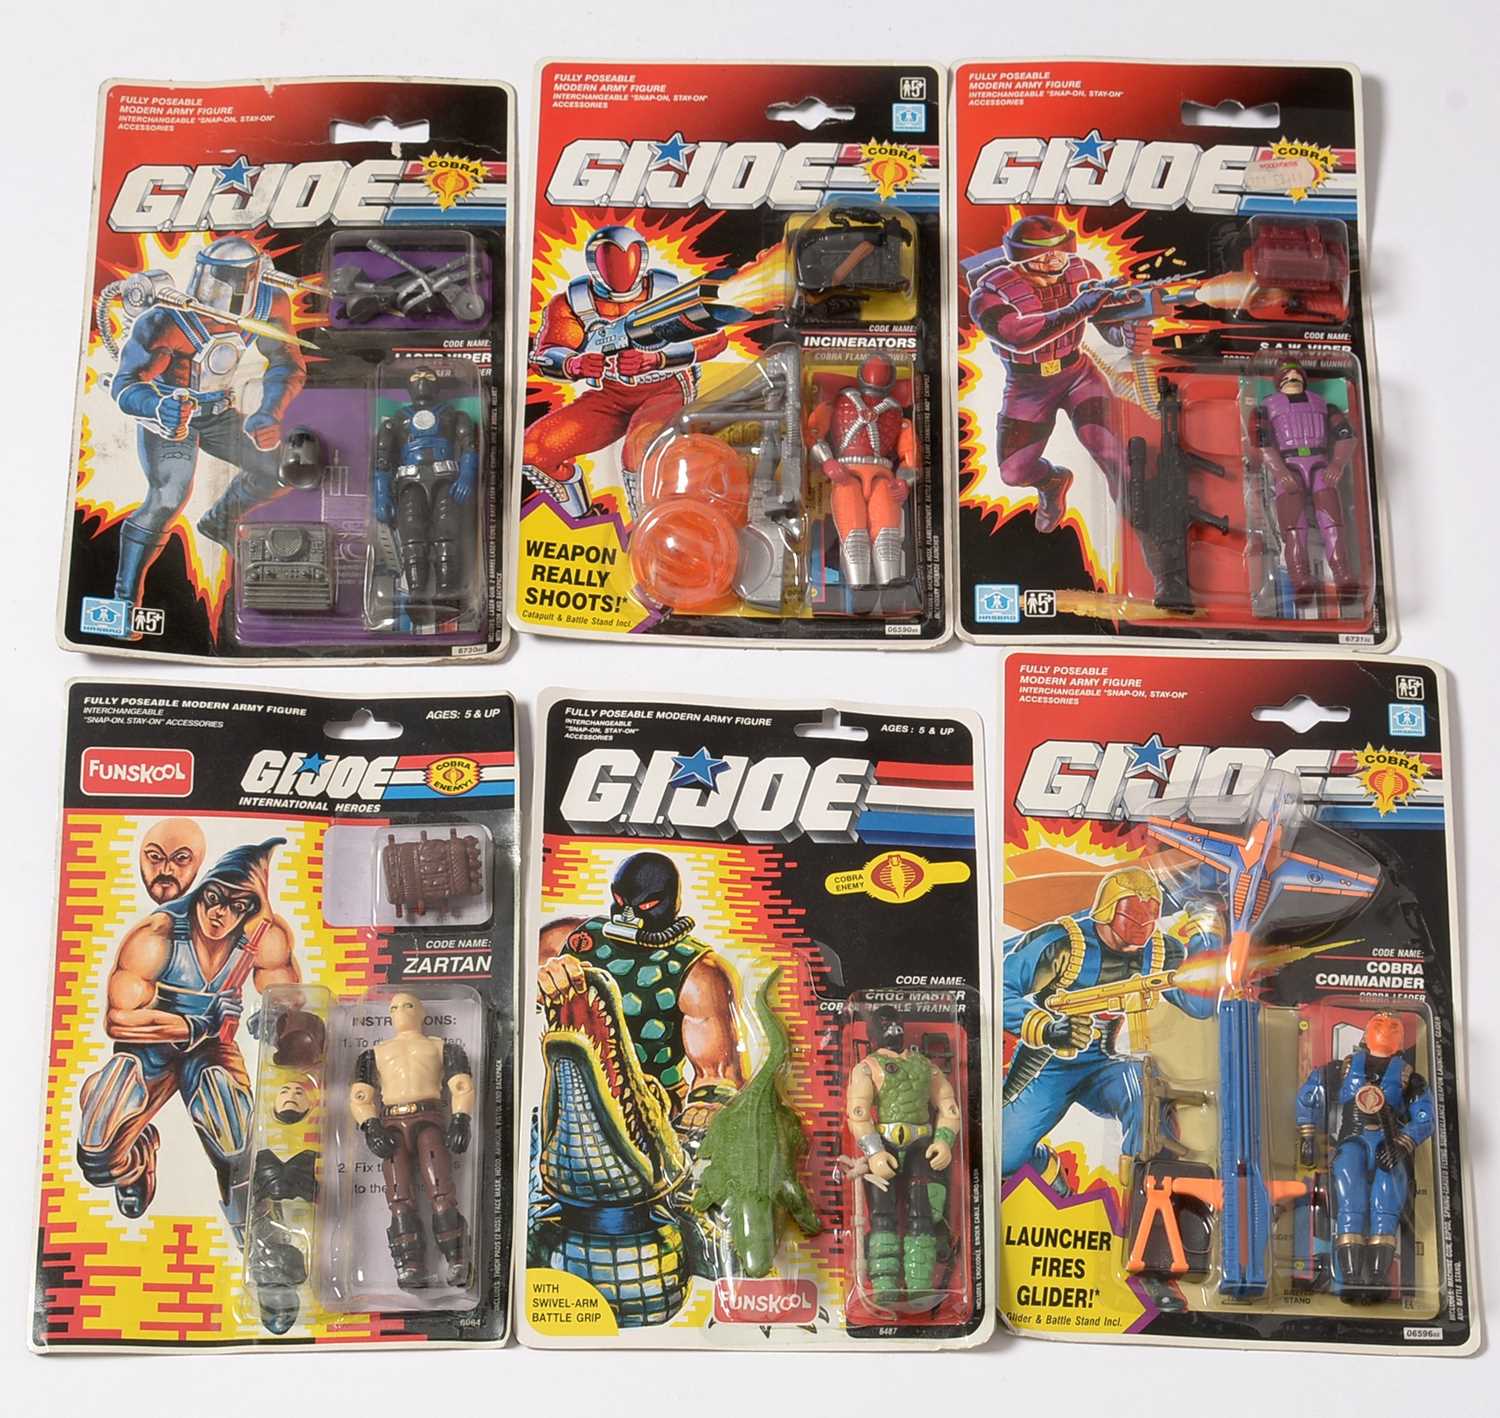 182 - Hasbro G.I. Joe figurines,